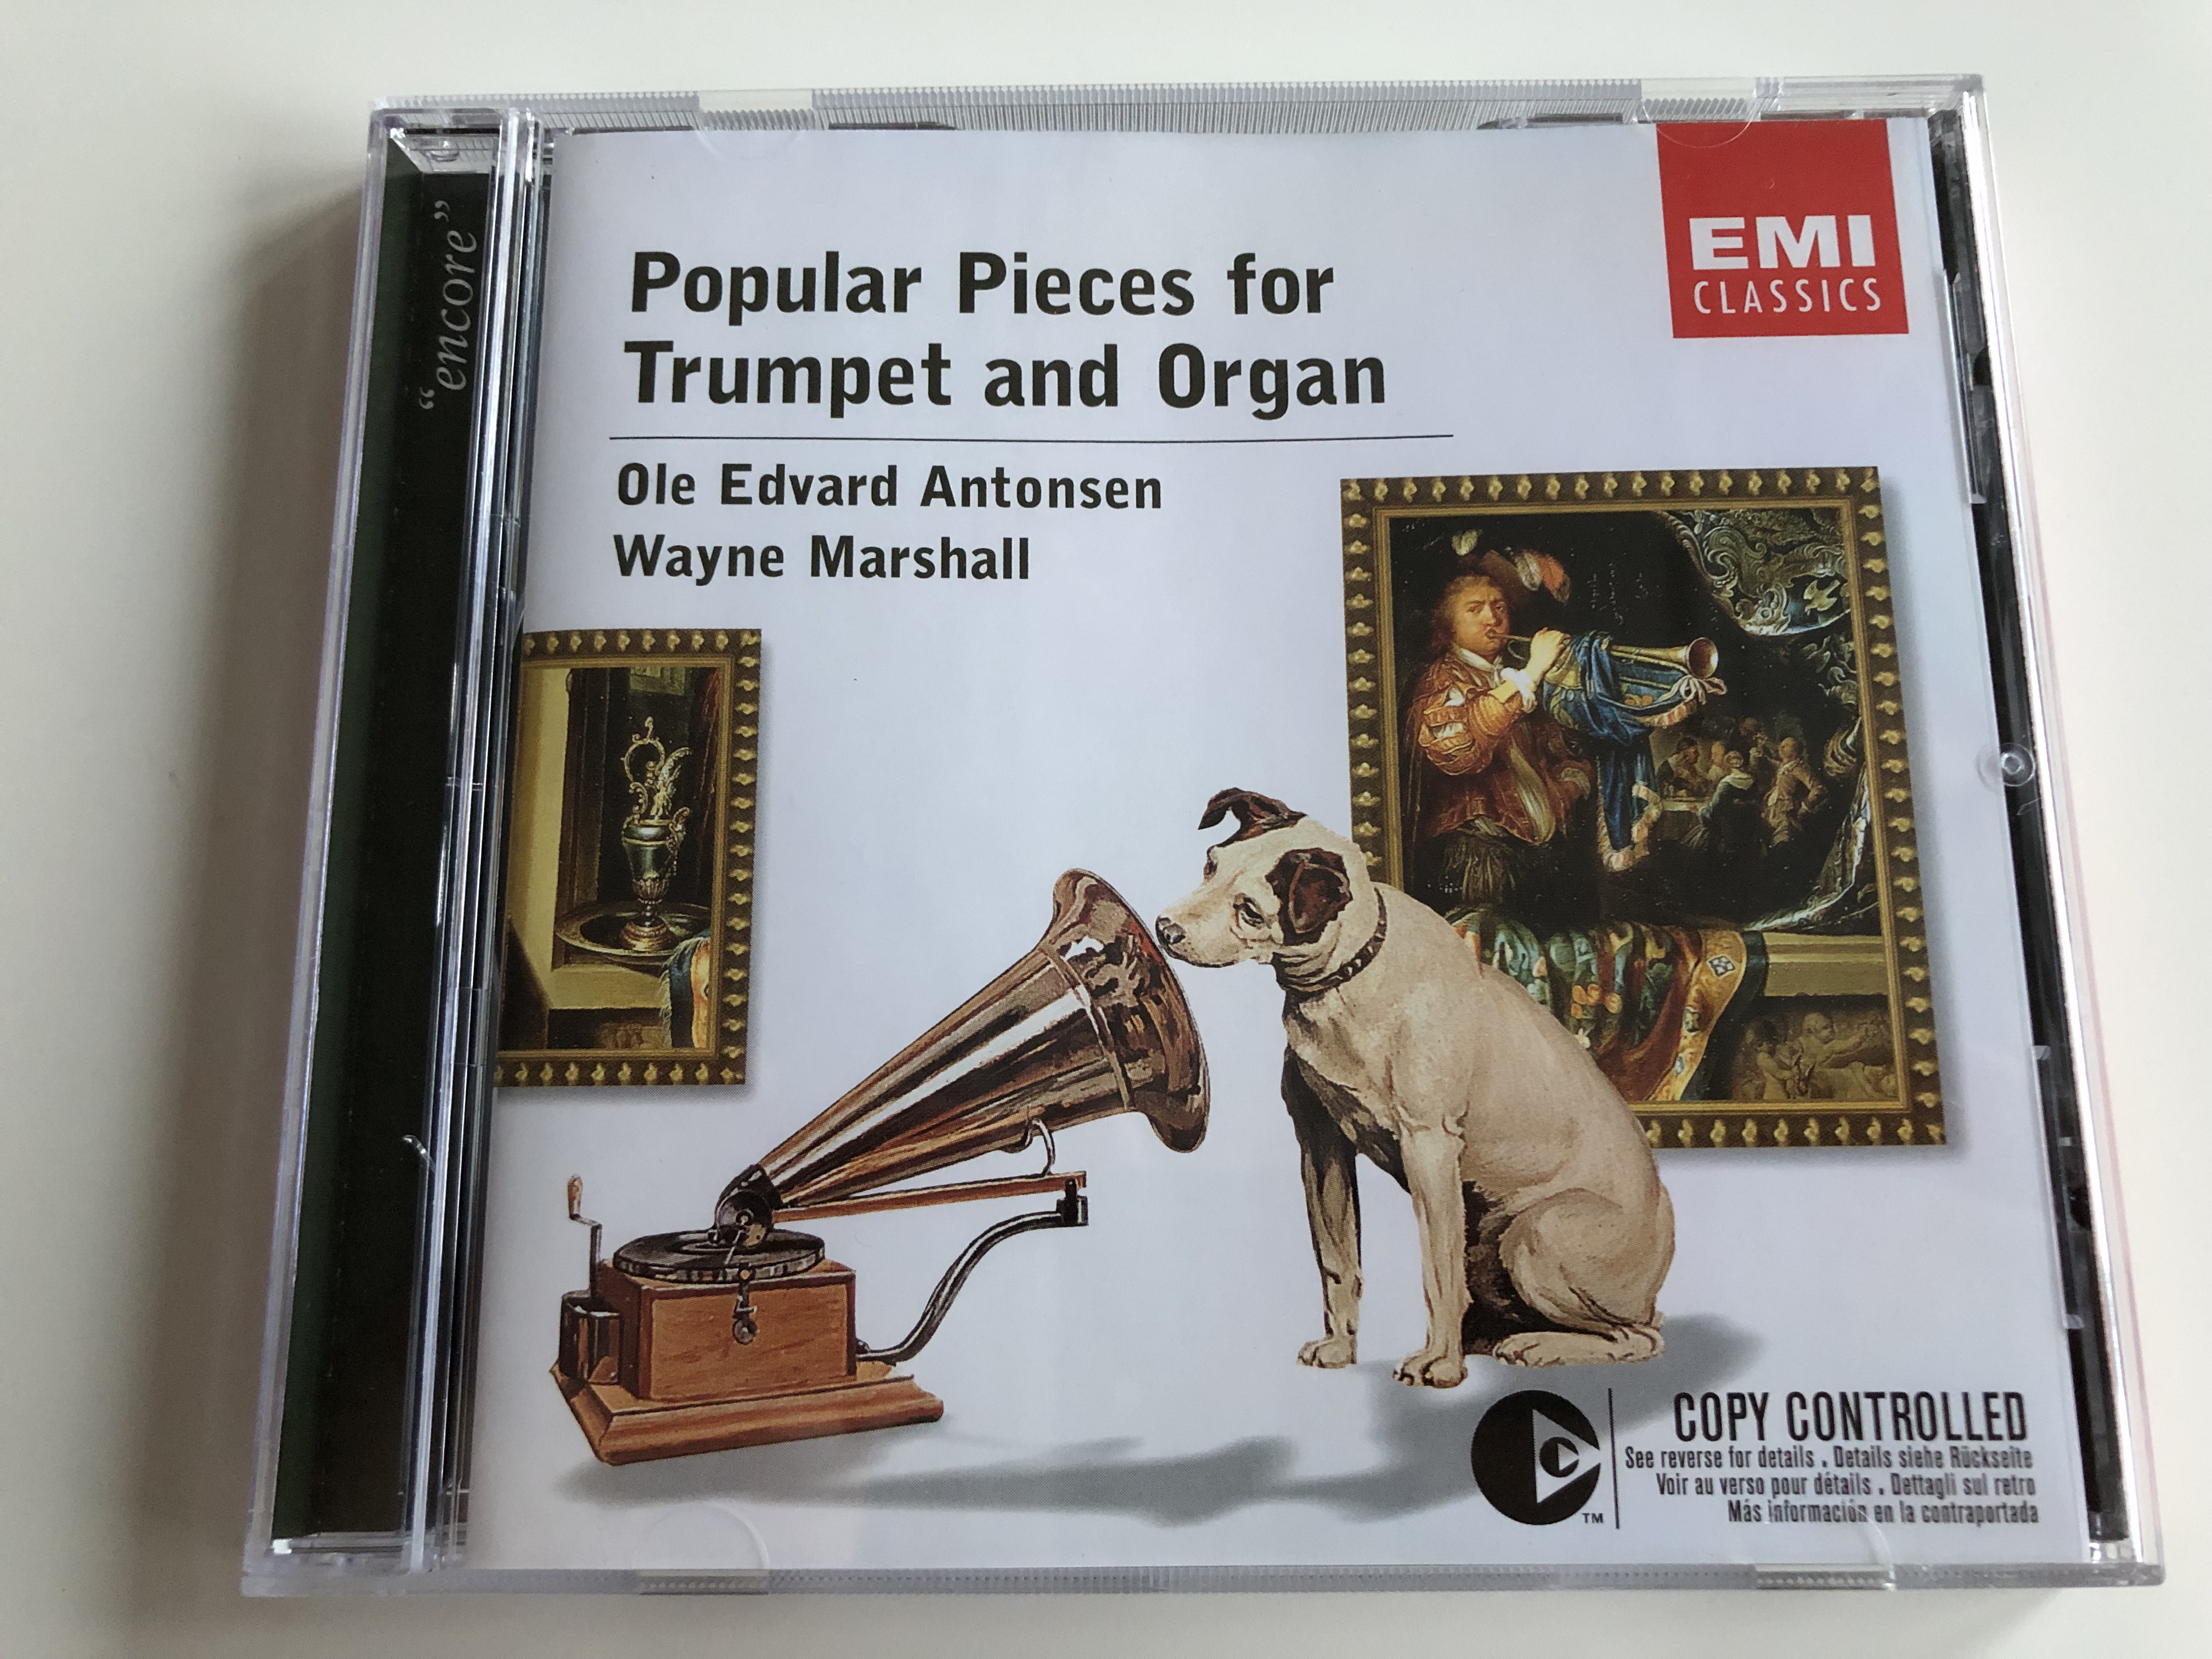 popular-pieces-for-trumpet-and-organ-ole-edvard-antonsen-wayne-marshall-emi-classics-audio-cd-2003-stereo-5-85452-2-1-.jpg